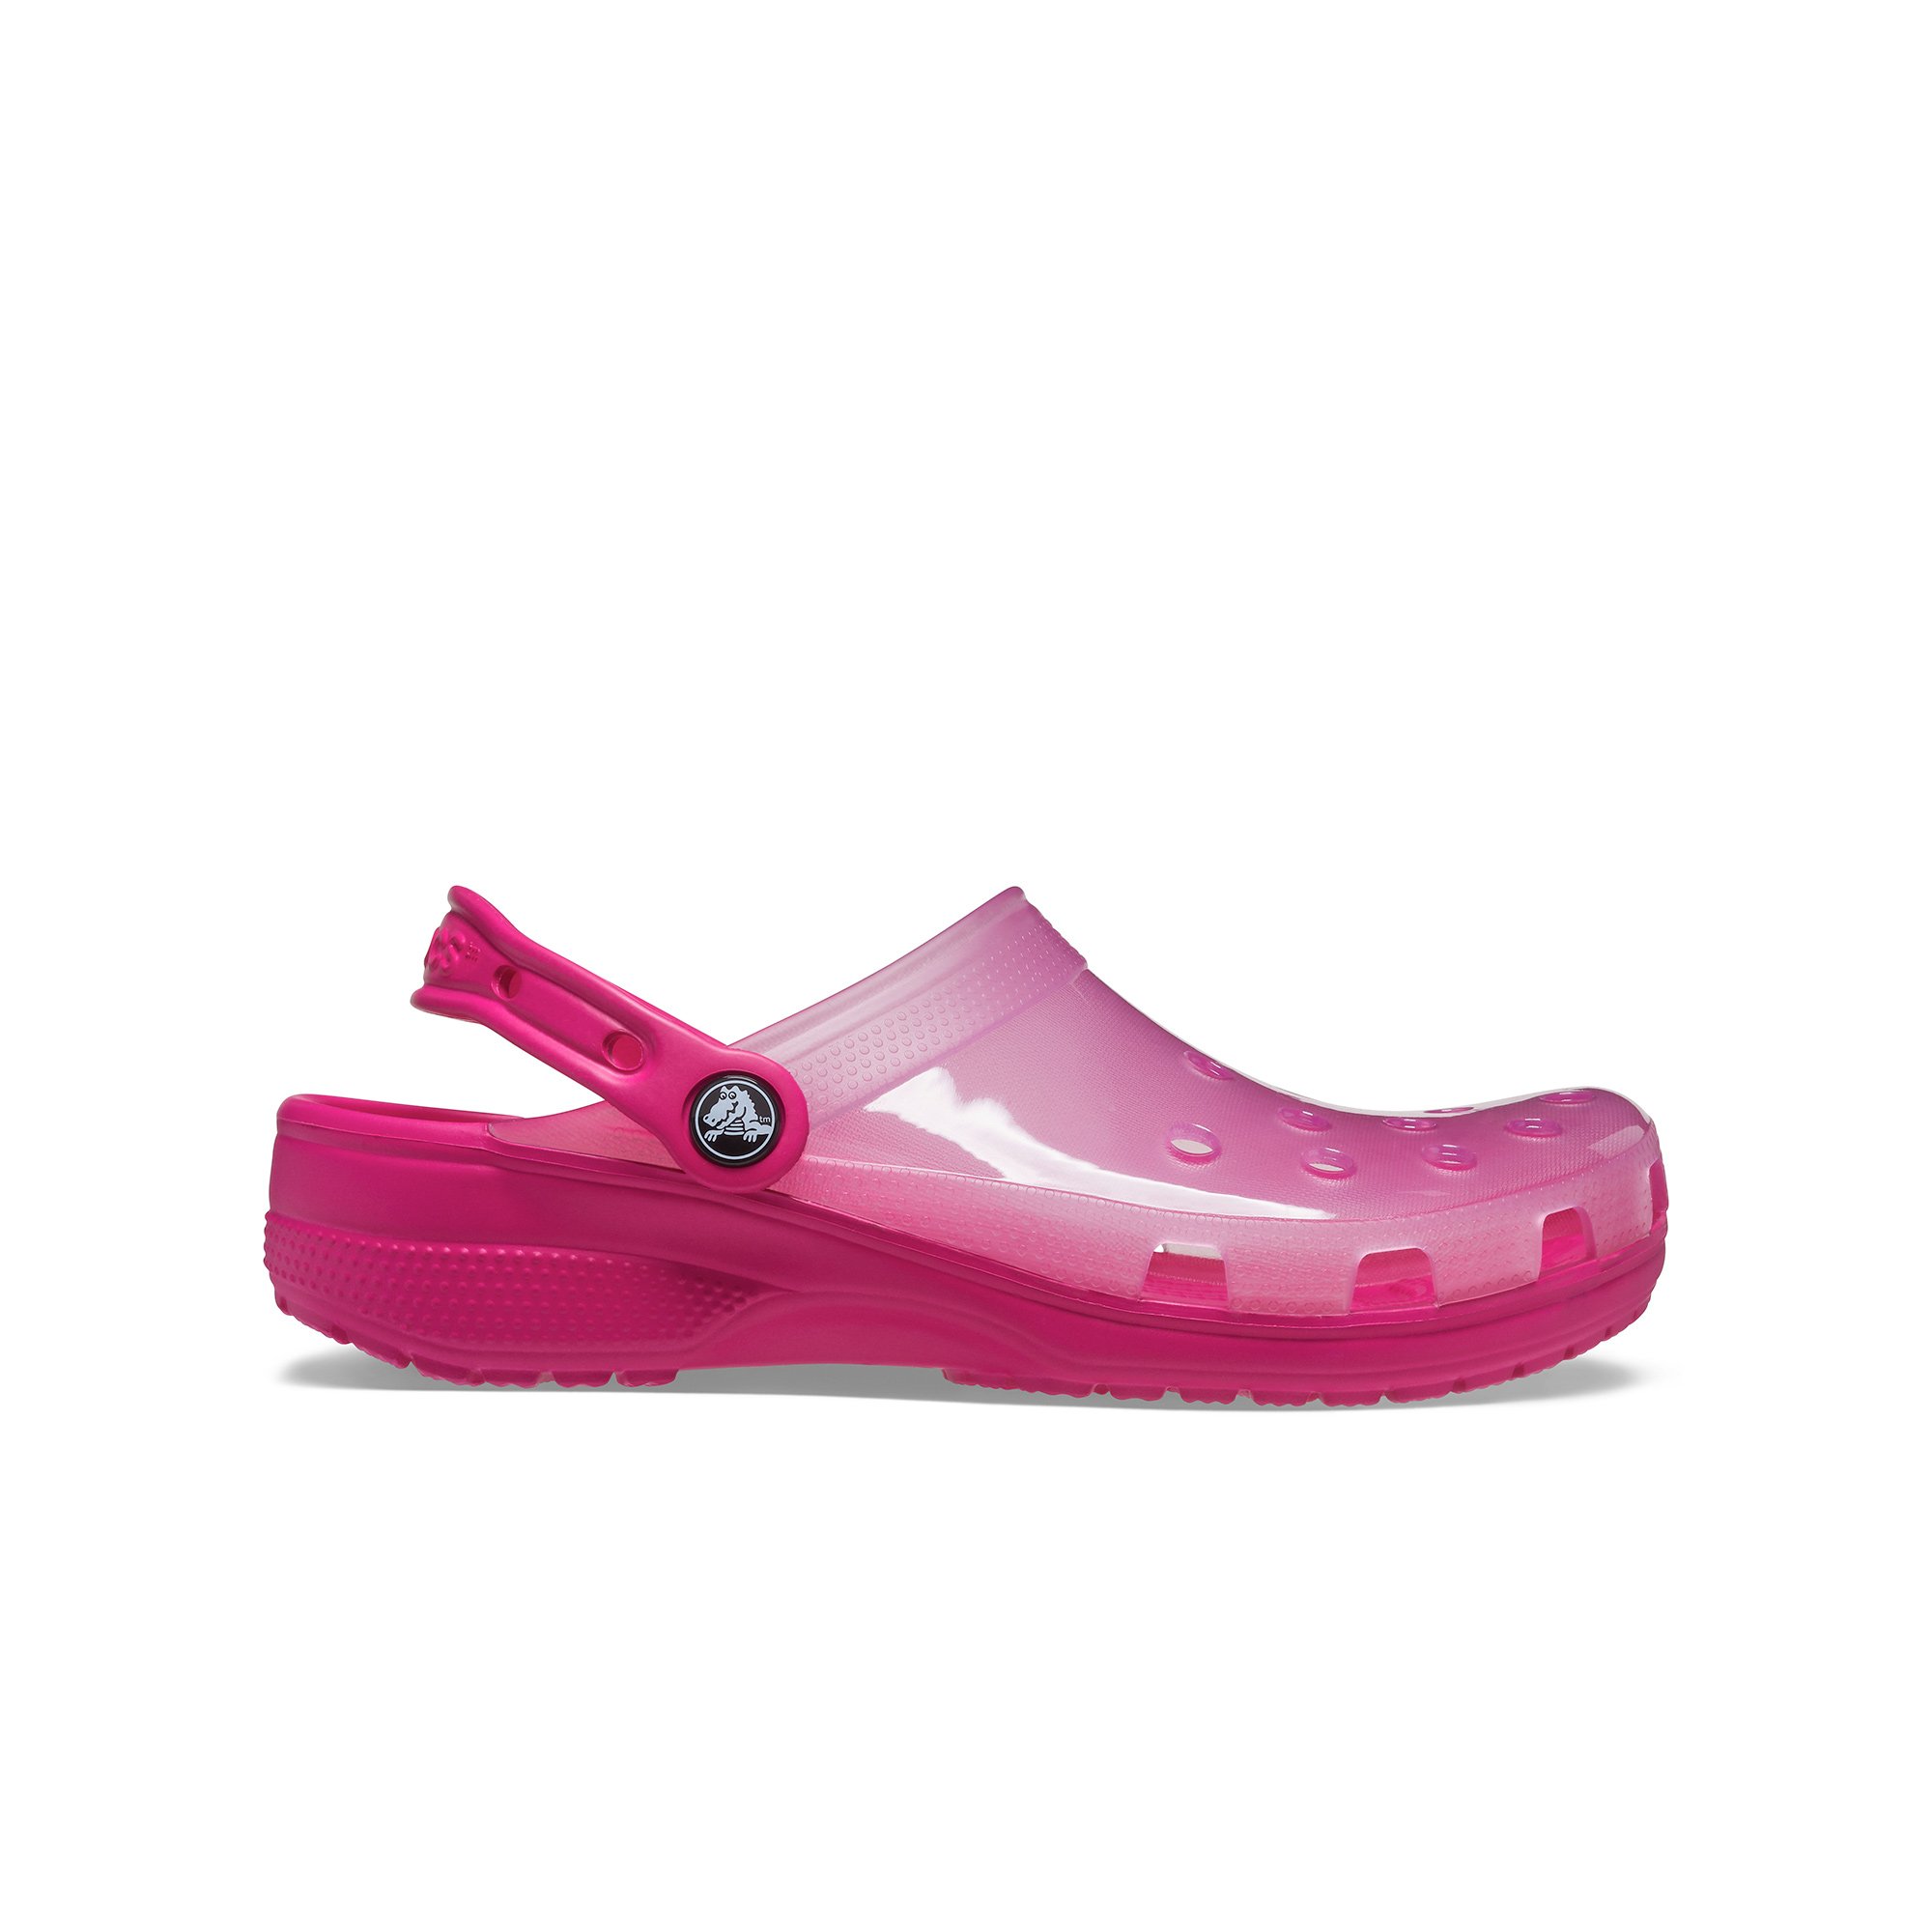 Giày lười unisex Crocs Translucent Classic 206908  -  6X0